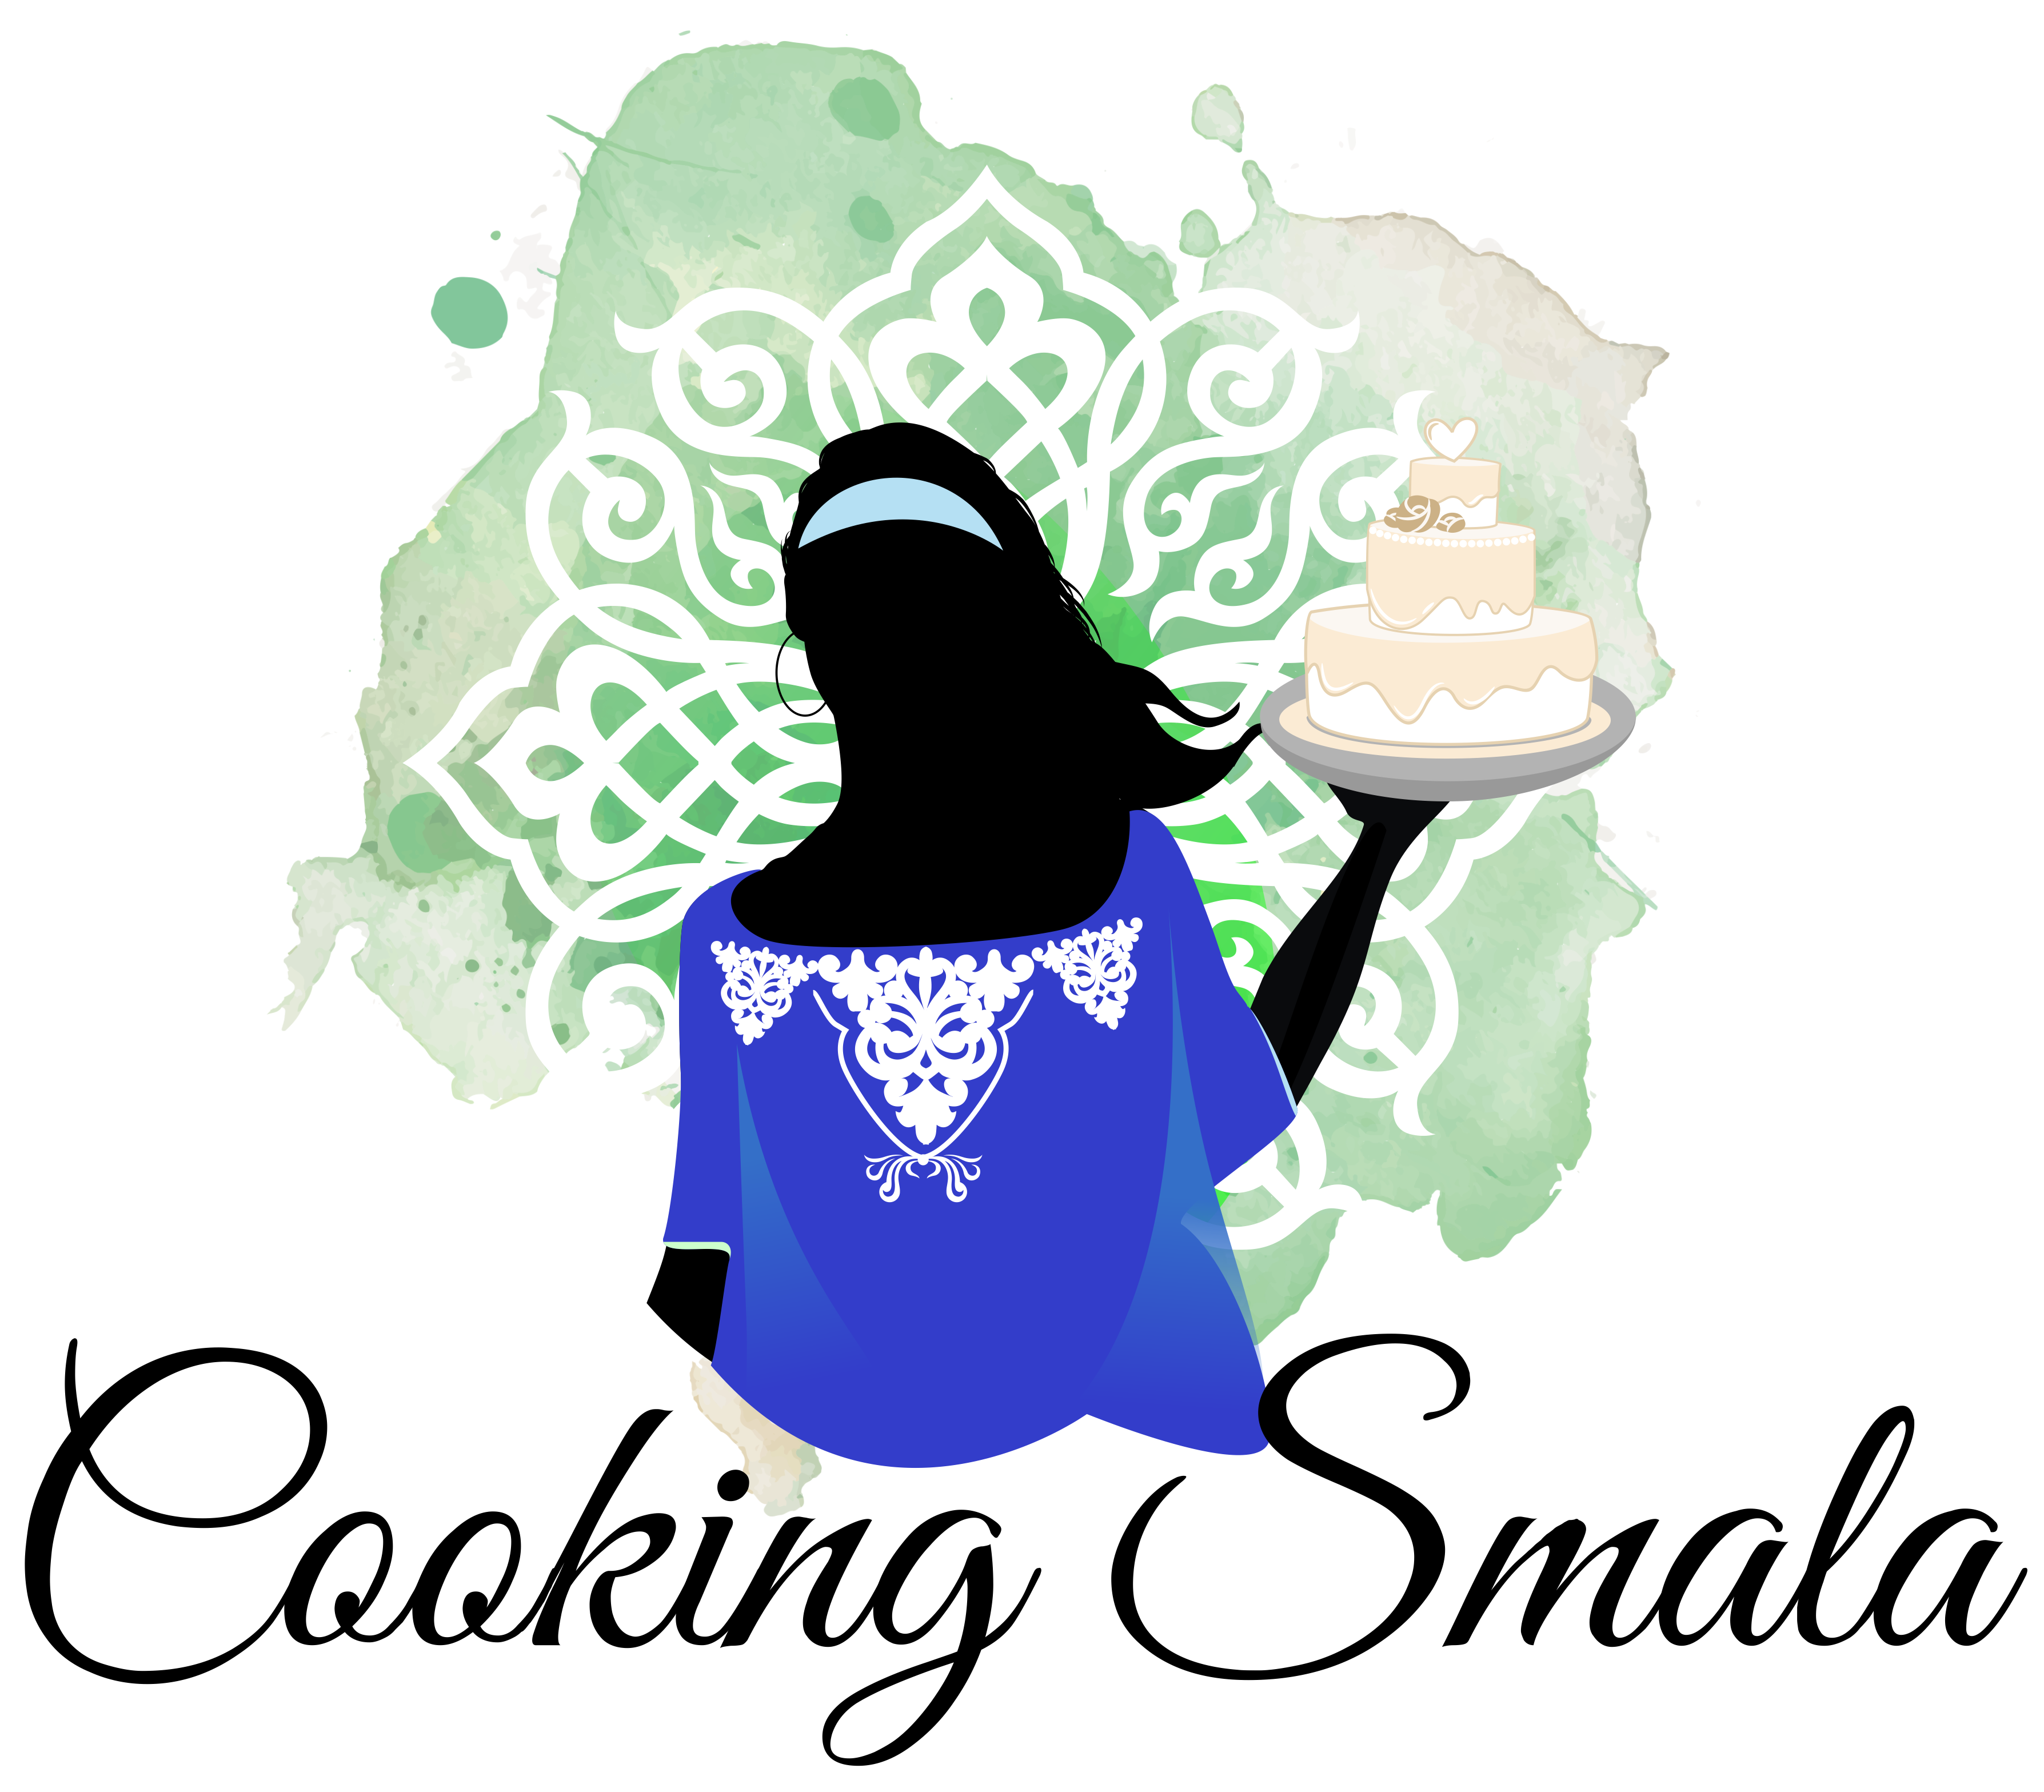 Cooking Smala